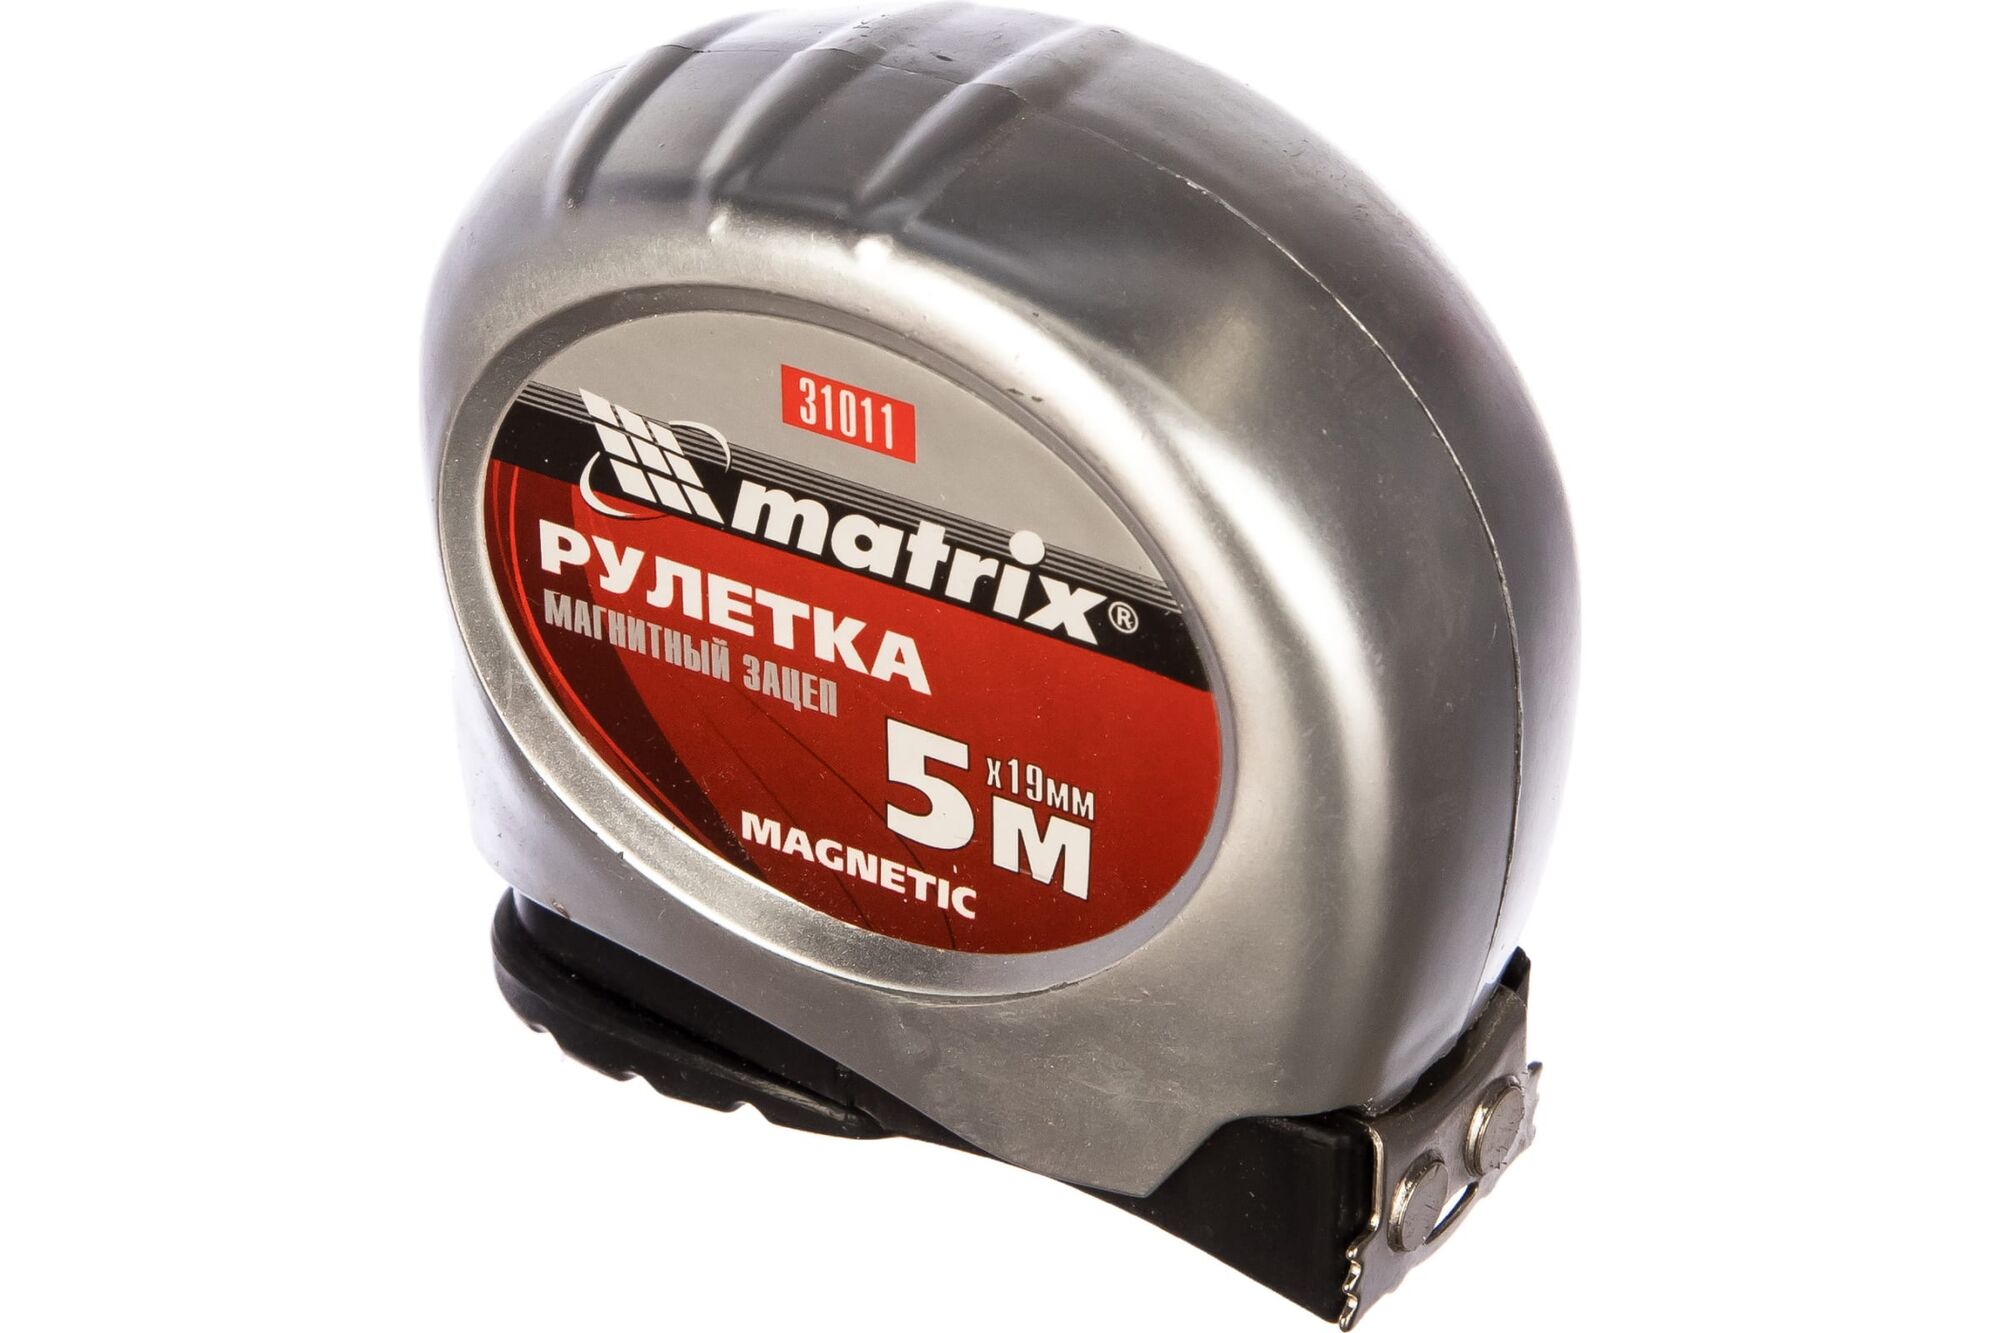 Рулетка Magnetic, 5 м х 19 мм, MATRIX 31011